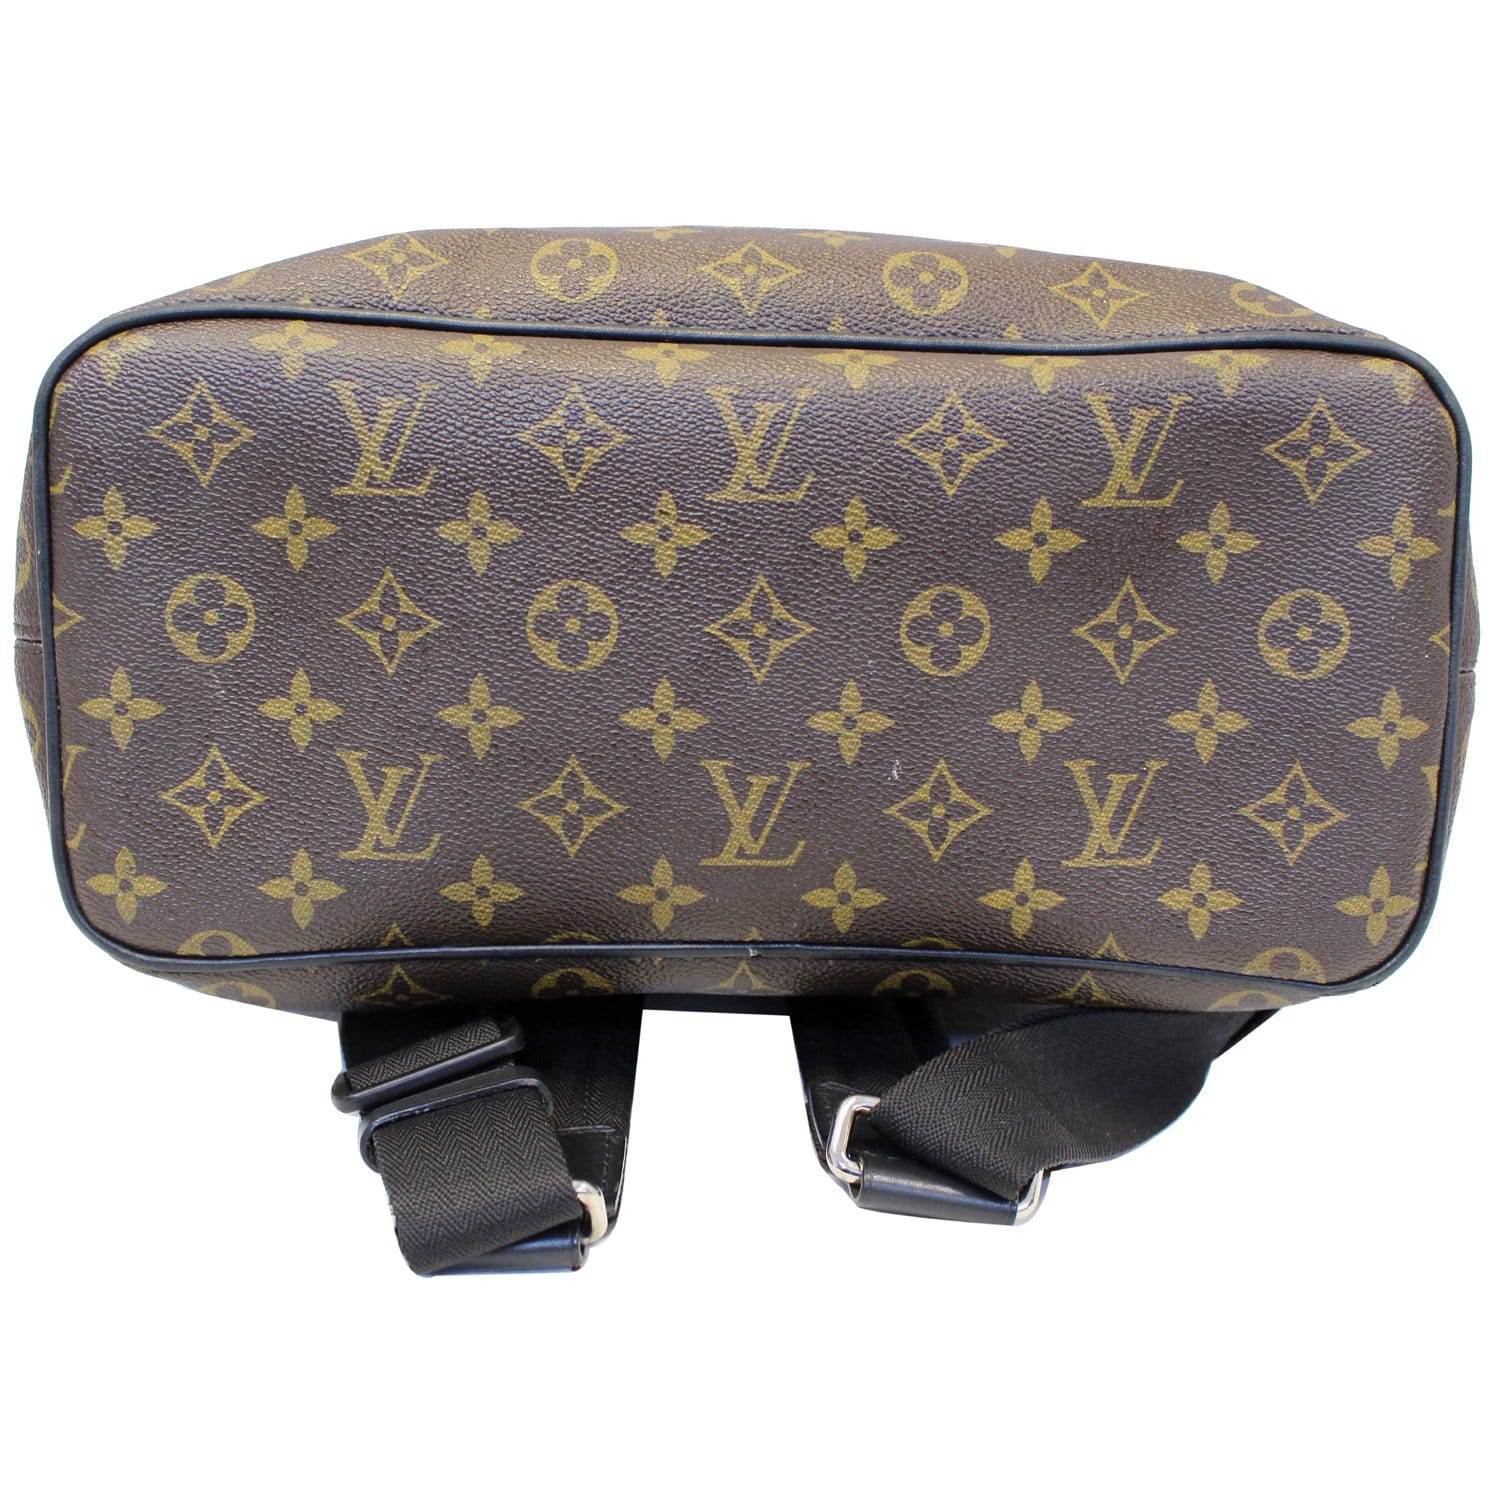 At Auction: Louis Vuitton, Louis Vuitton Palk Backpack Macassar